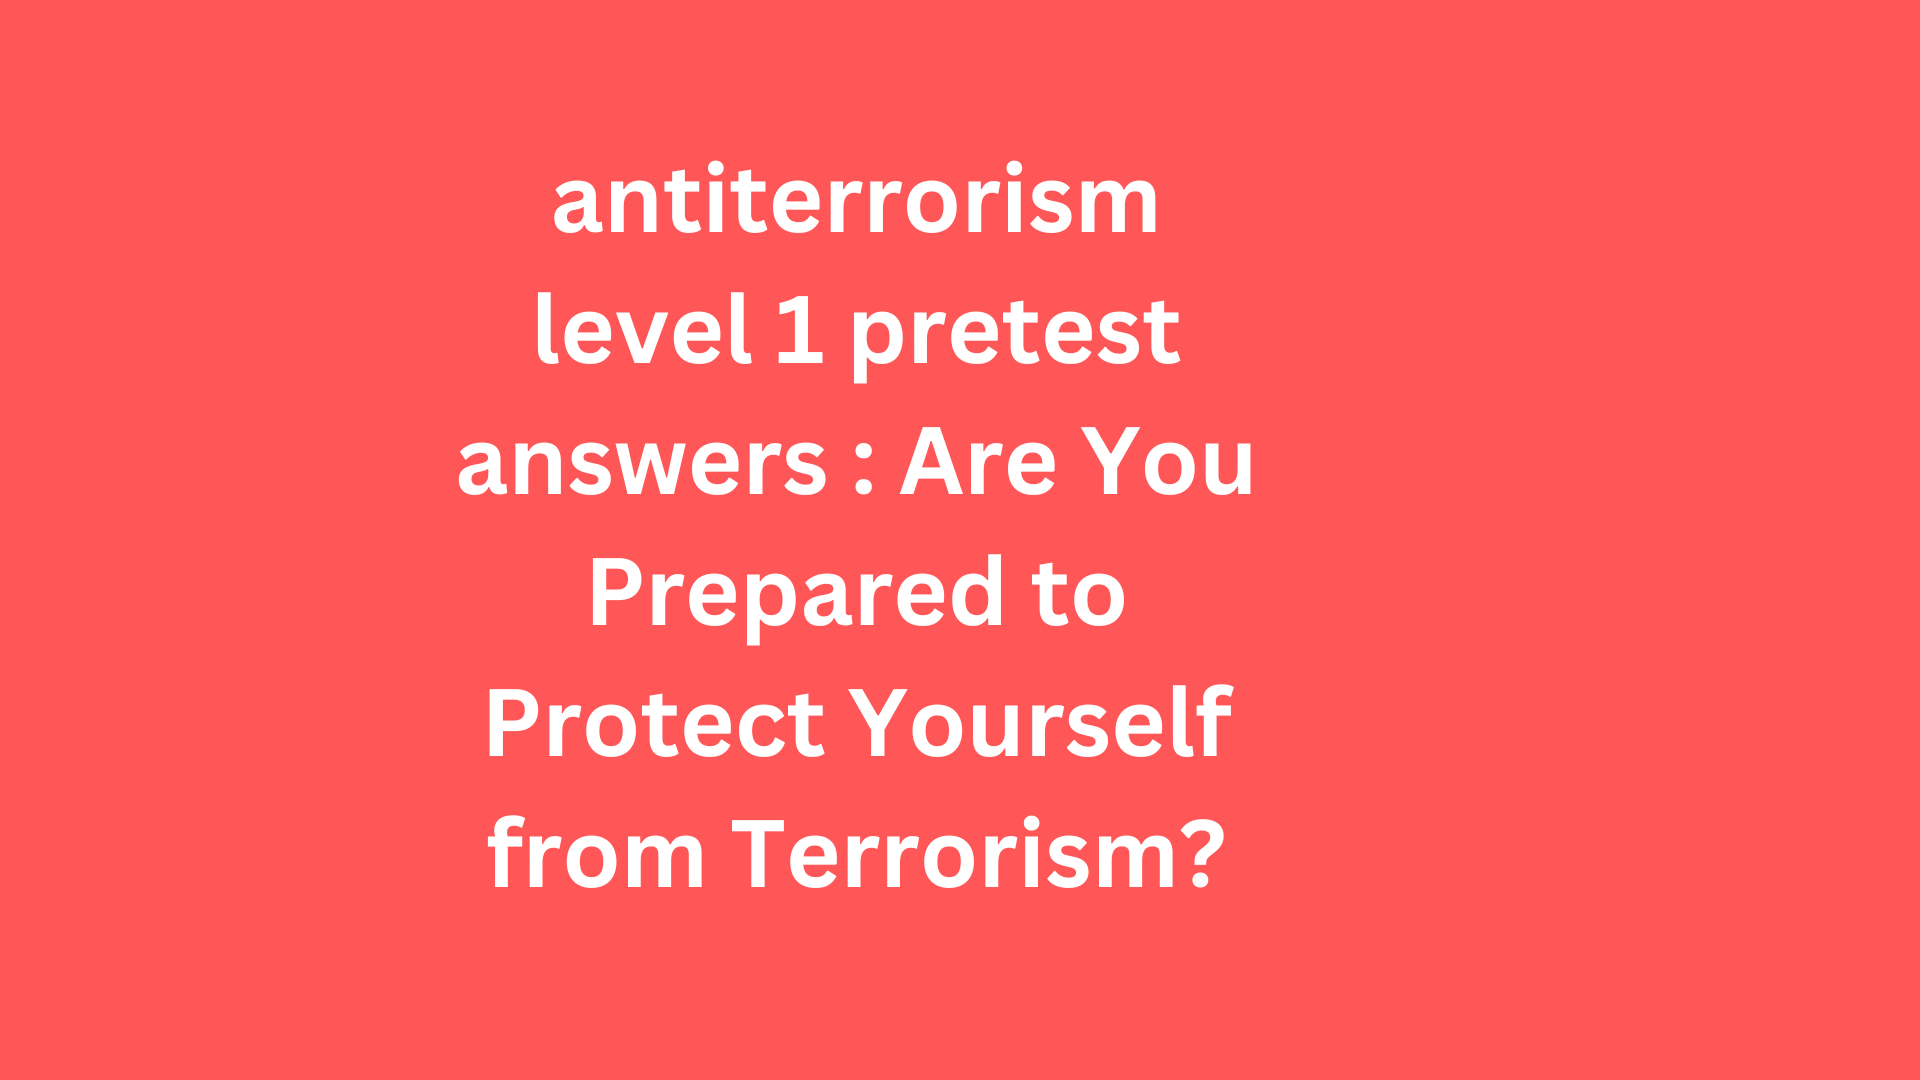 antiterrorism level 1 pretest answers